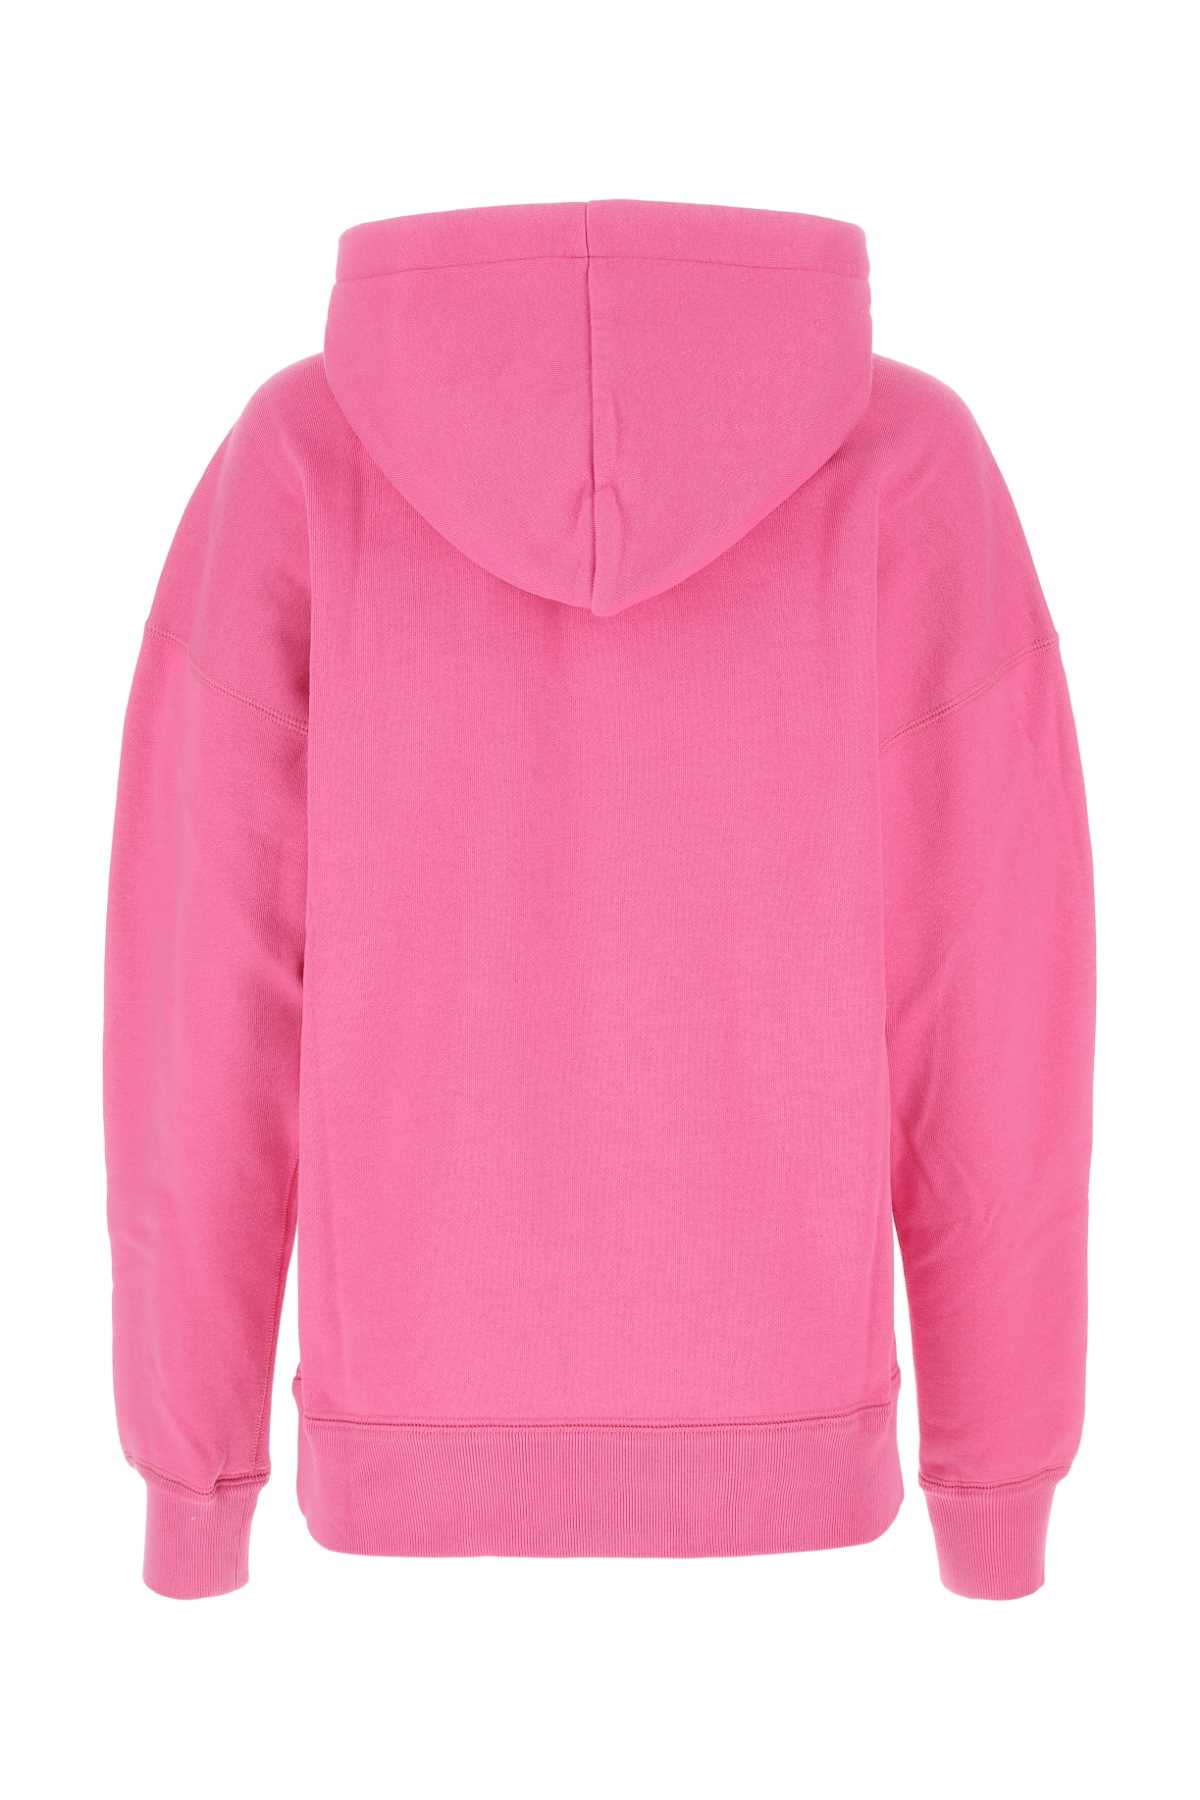 Marant Etoile Fuchsia Cotton Blend Mansel Sweatshirt In Pink